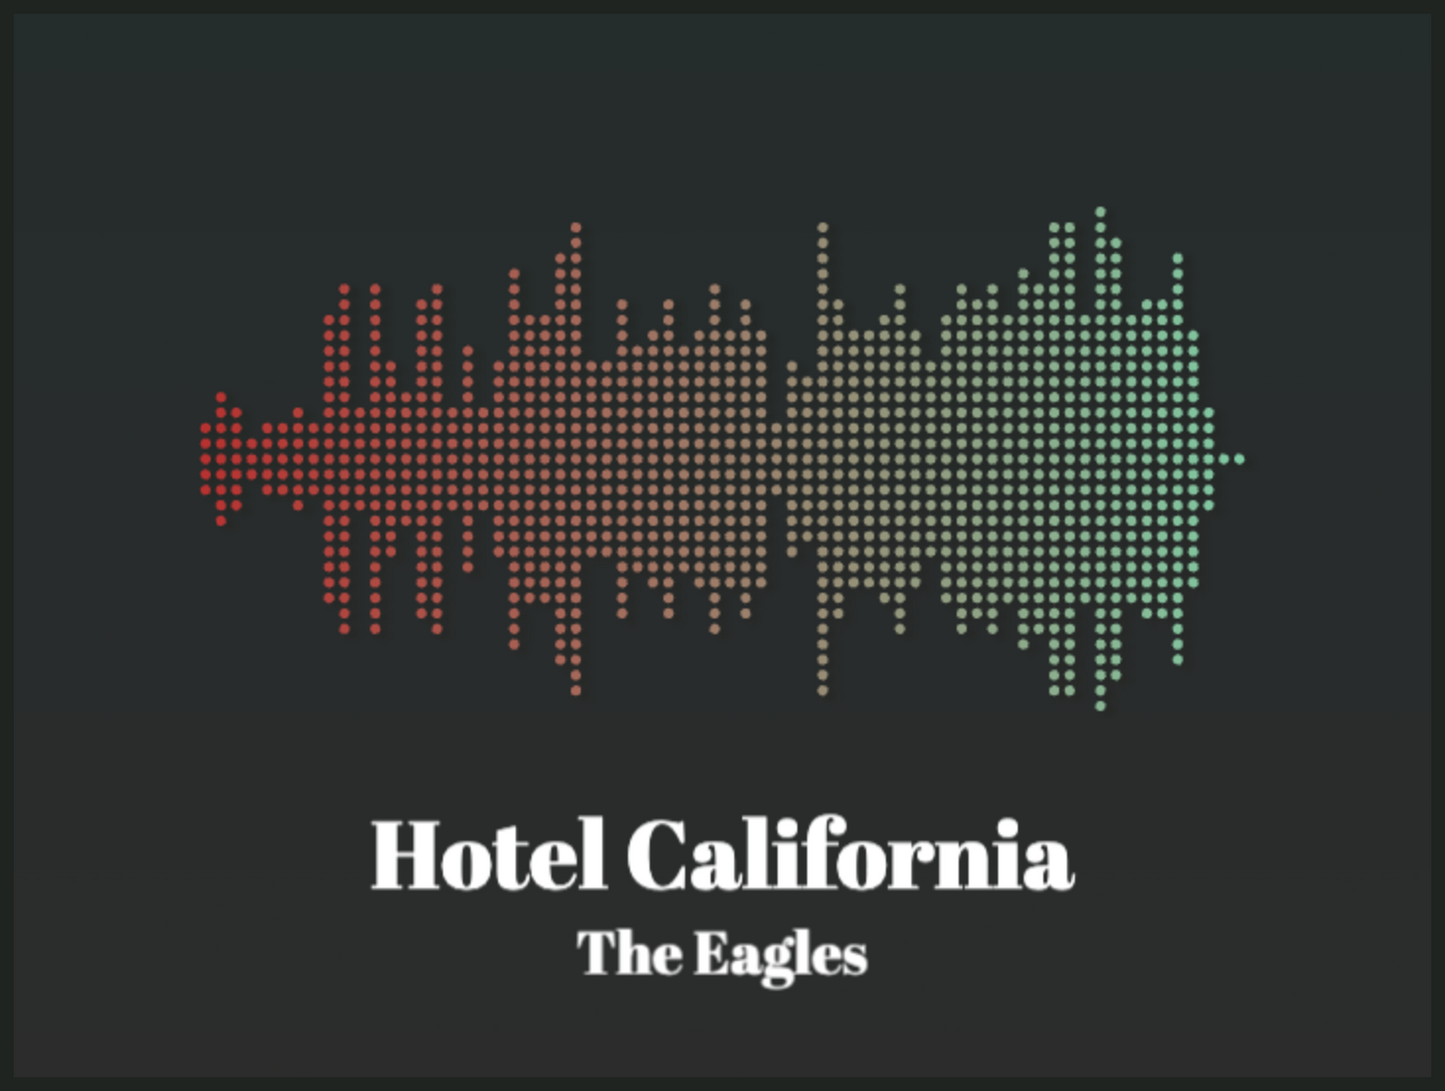 The Eagles - Hotel California Printawave Unique Design #1685553027547